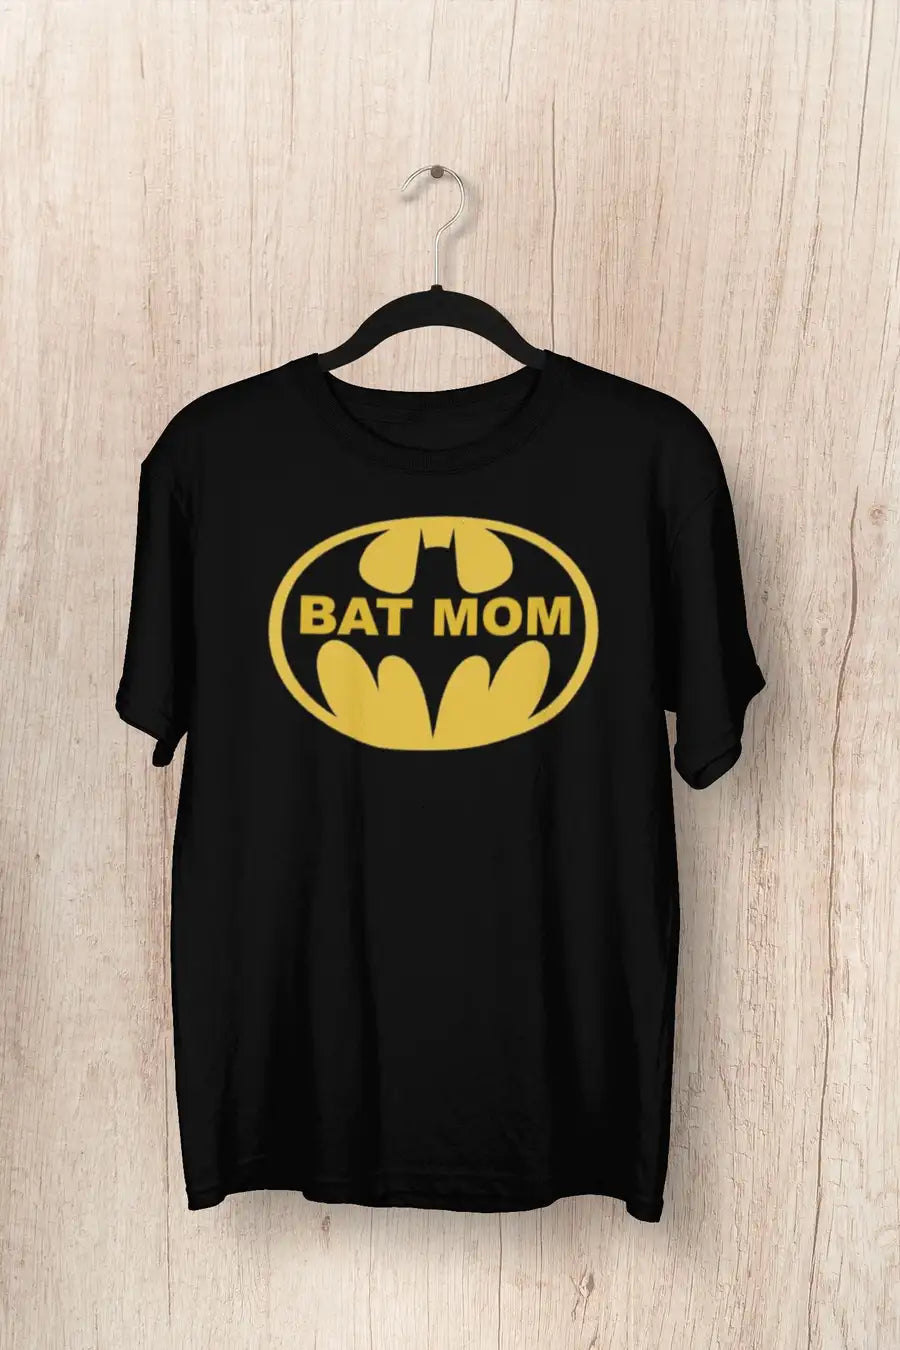 Bat Mom Exclusive T Shirt for Women | Premium Design | Catch My Drift India - Catch My Drift India Clothing batman, black, clothing, female, made in india, mom, mother, parents, shirt, super 